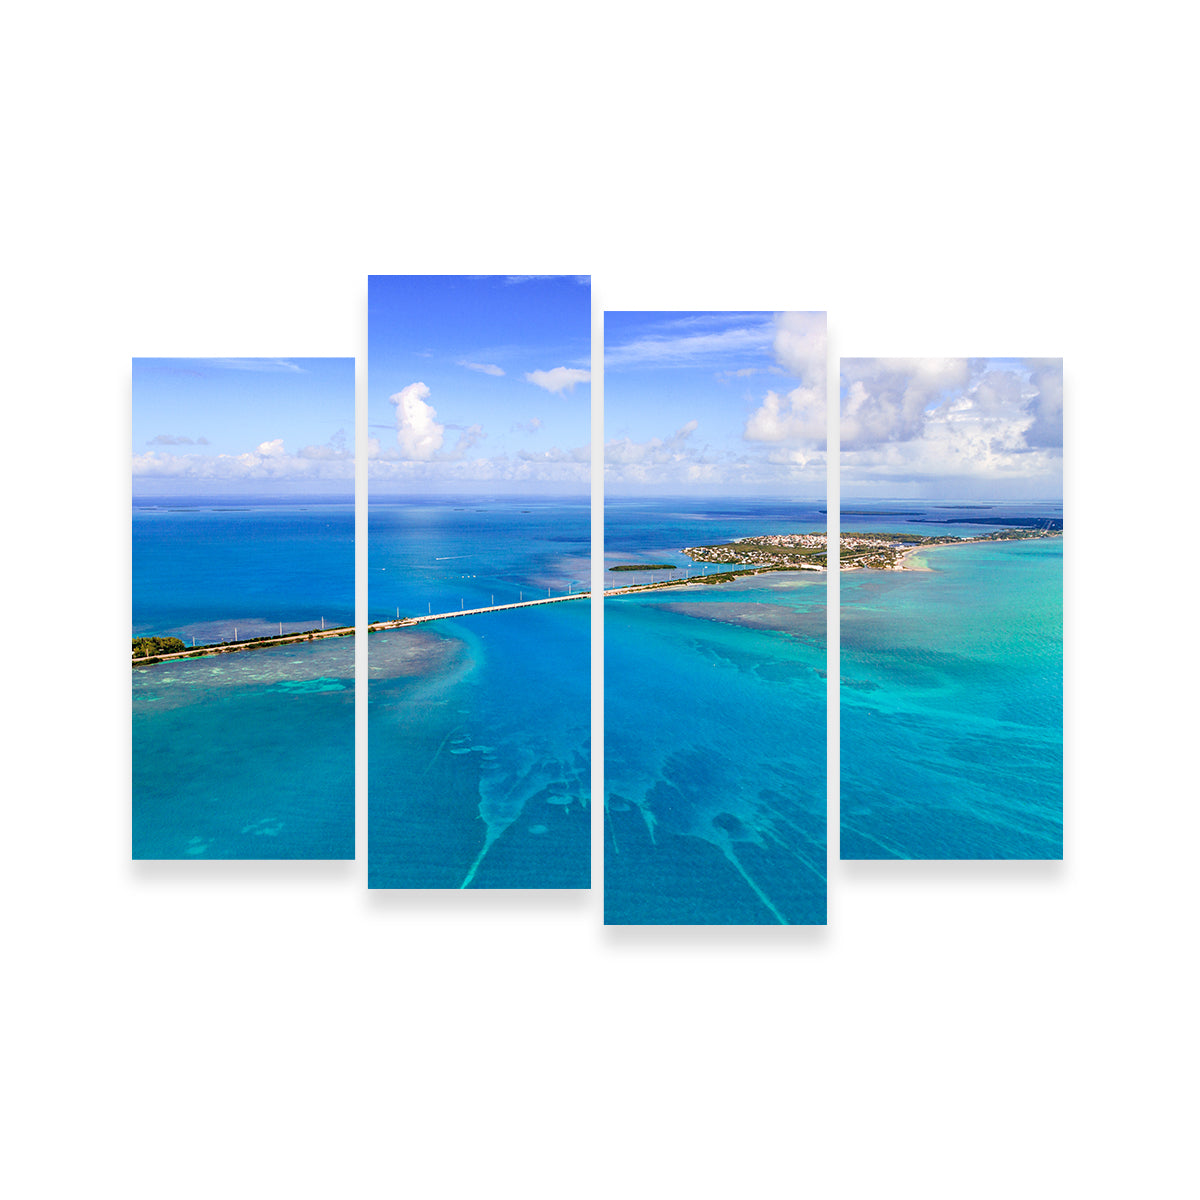 Florida Keys Aerial View with Bridge